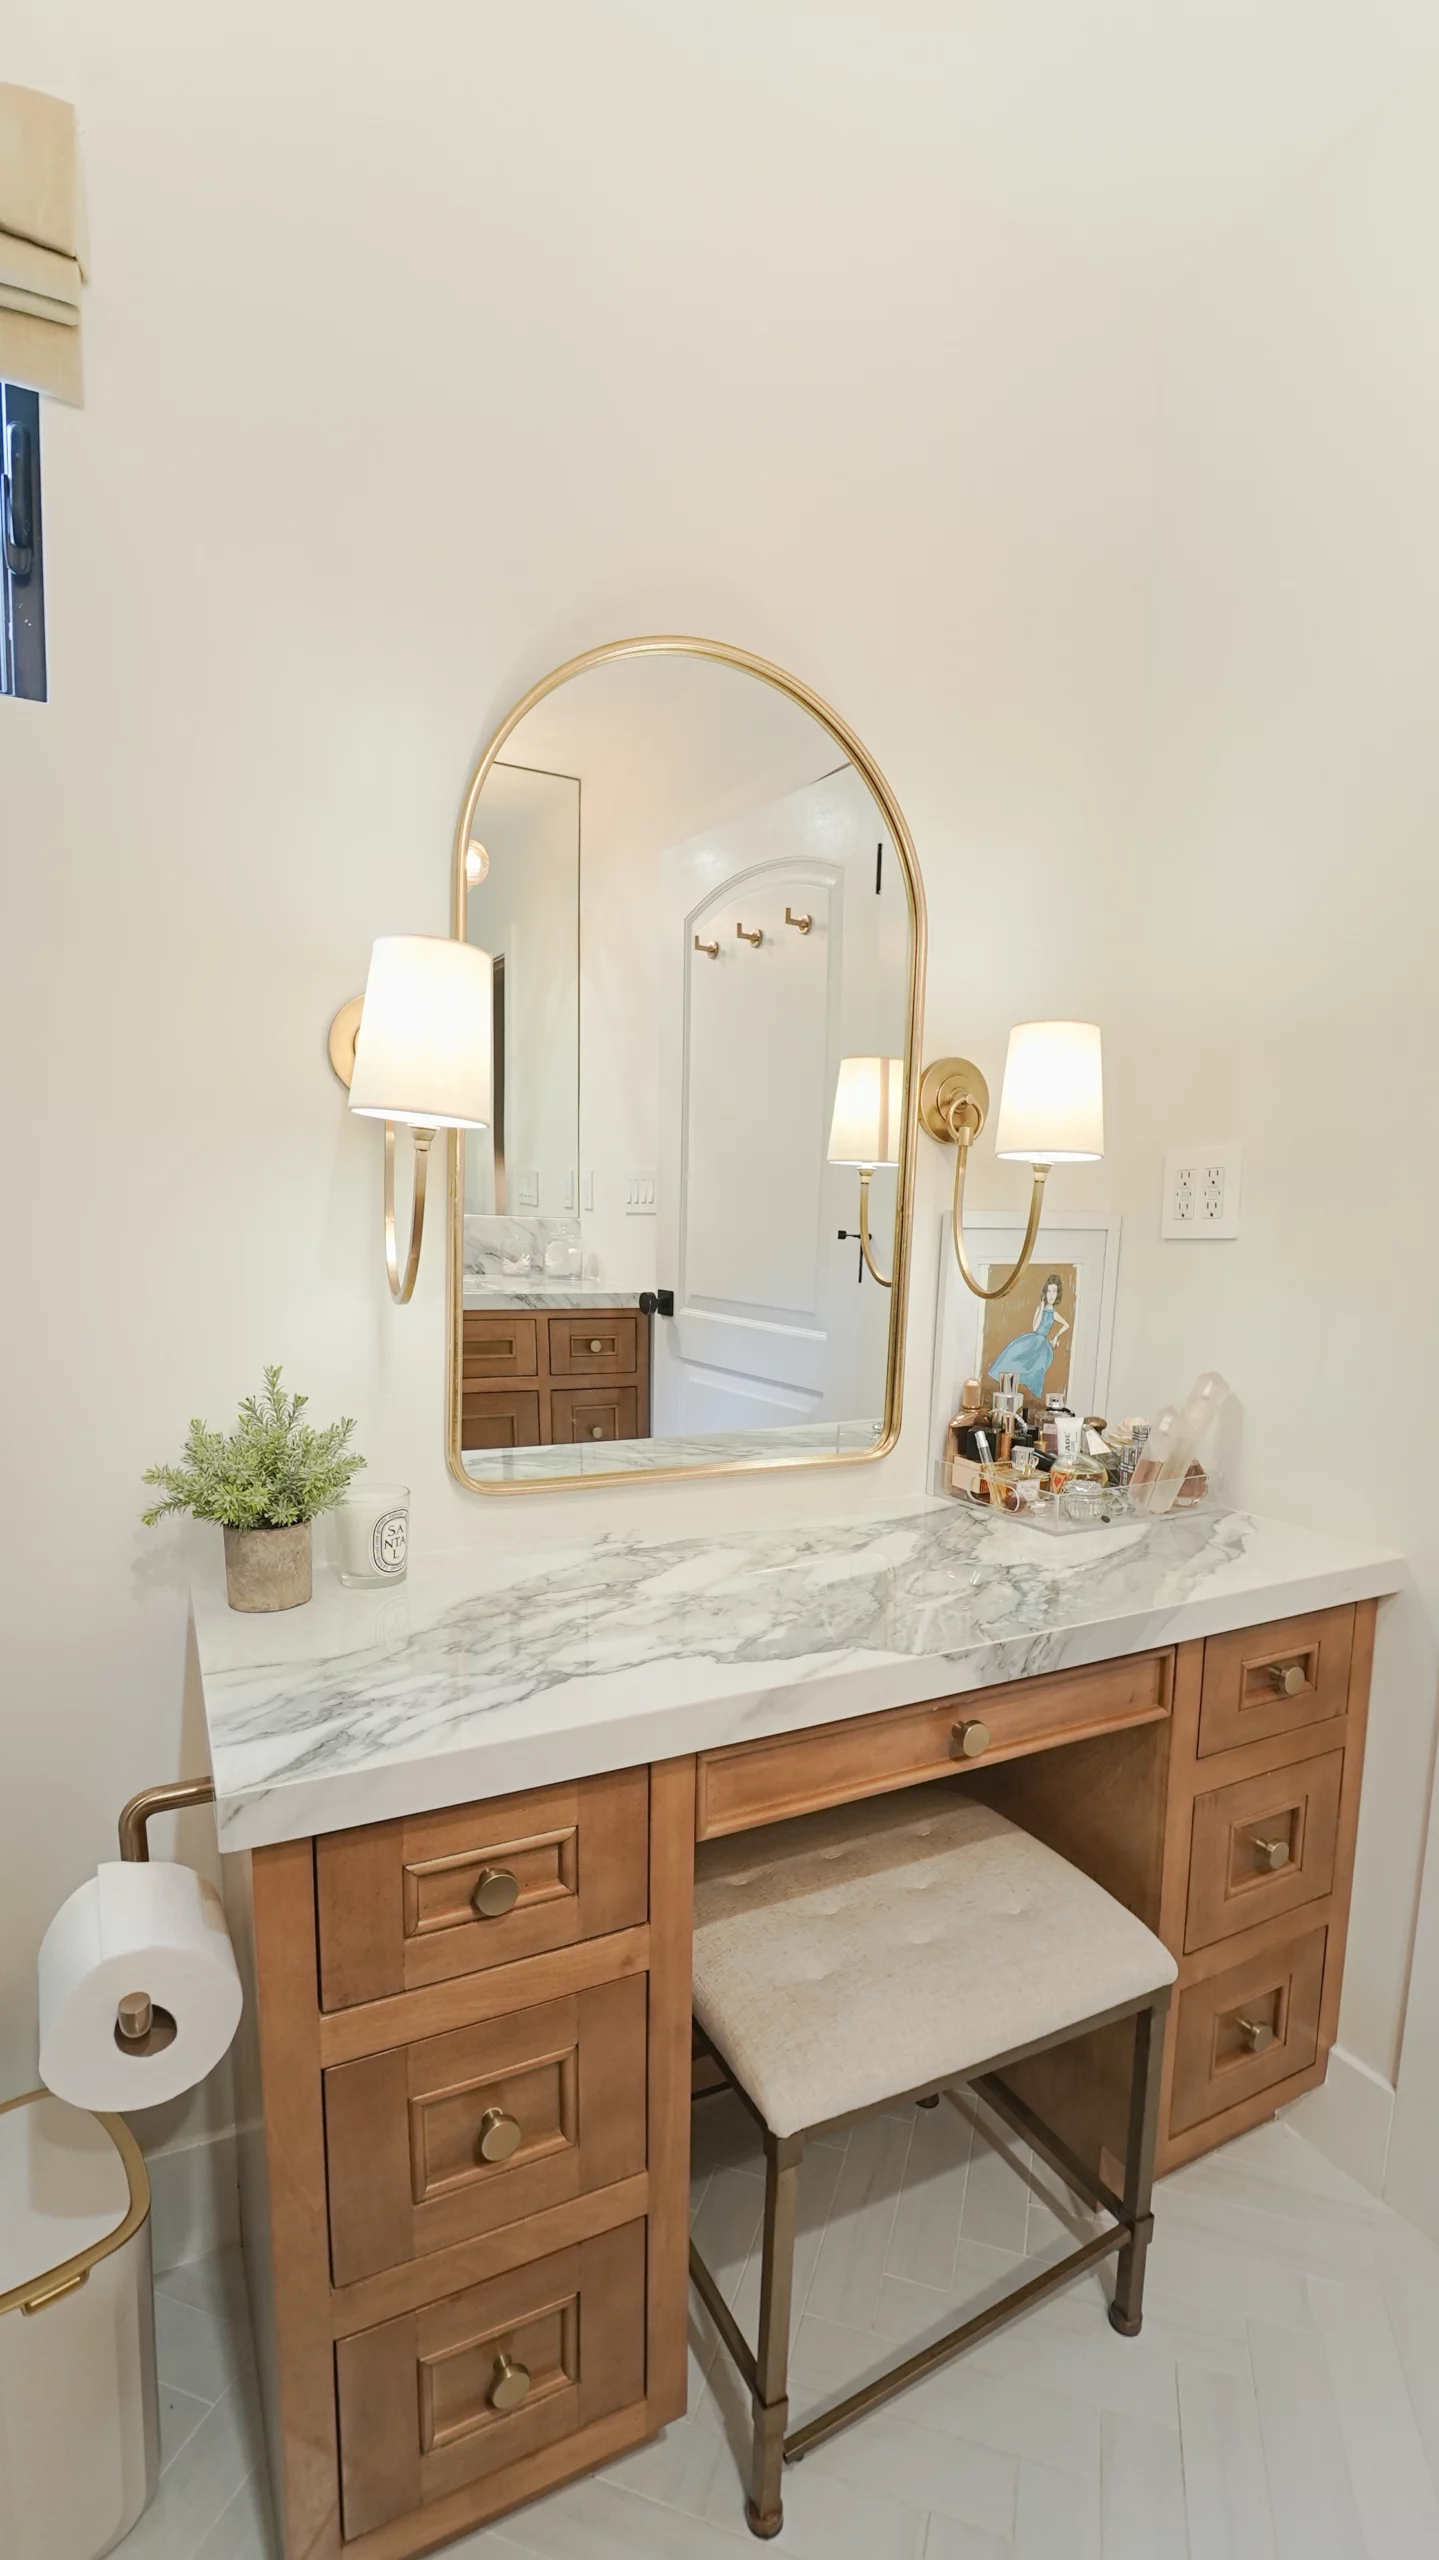 Elegant bathroom vanity with mirror and warm lighting.